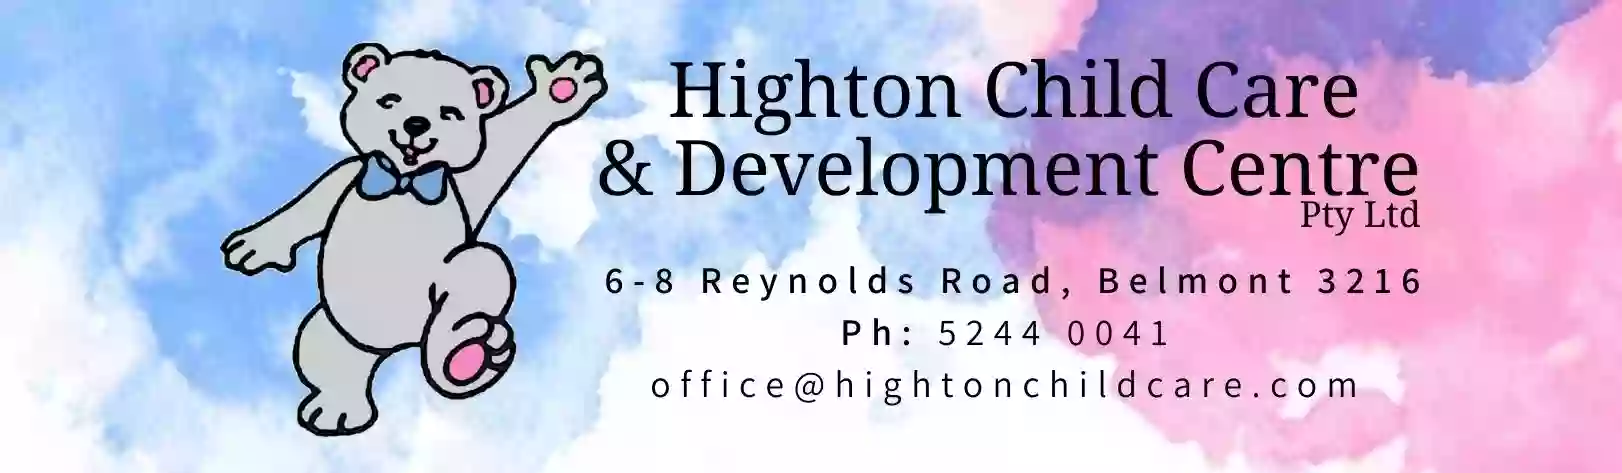 Highton Child Care & Development Centre Pty Ltd.